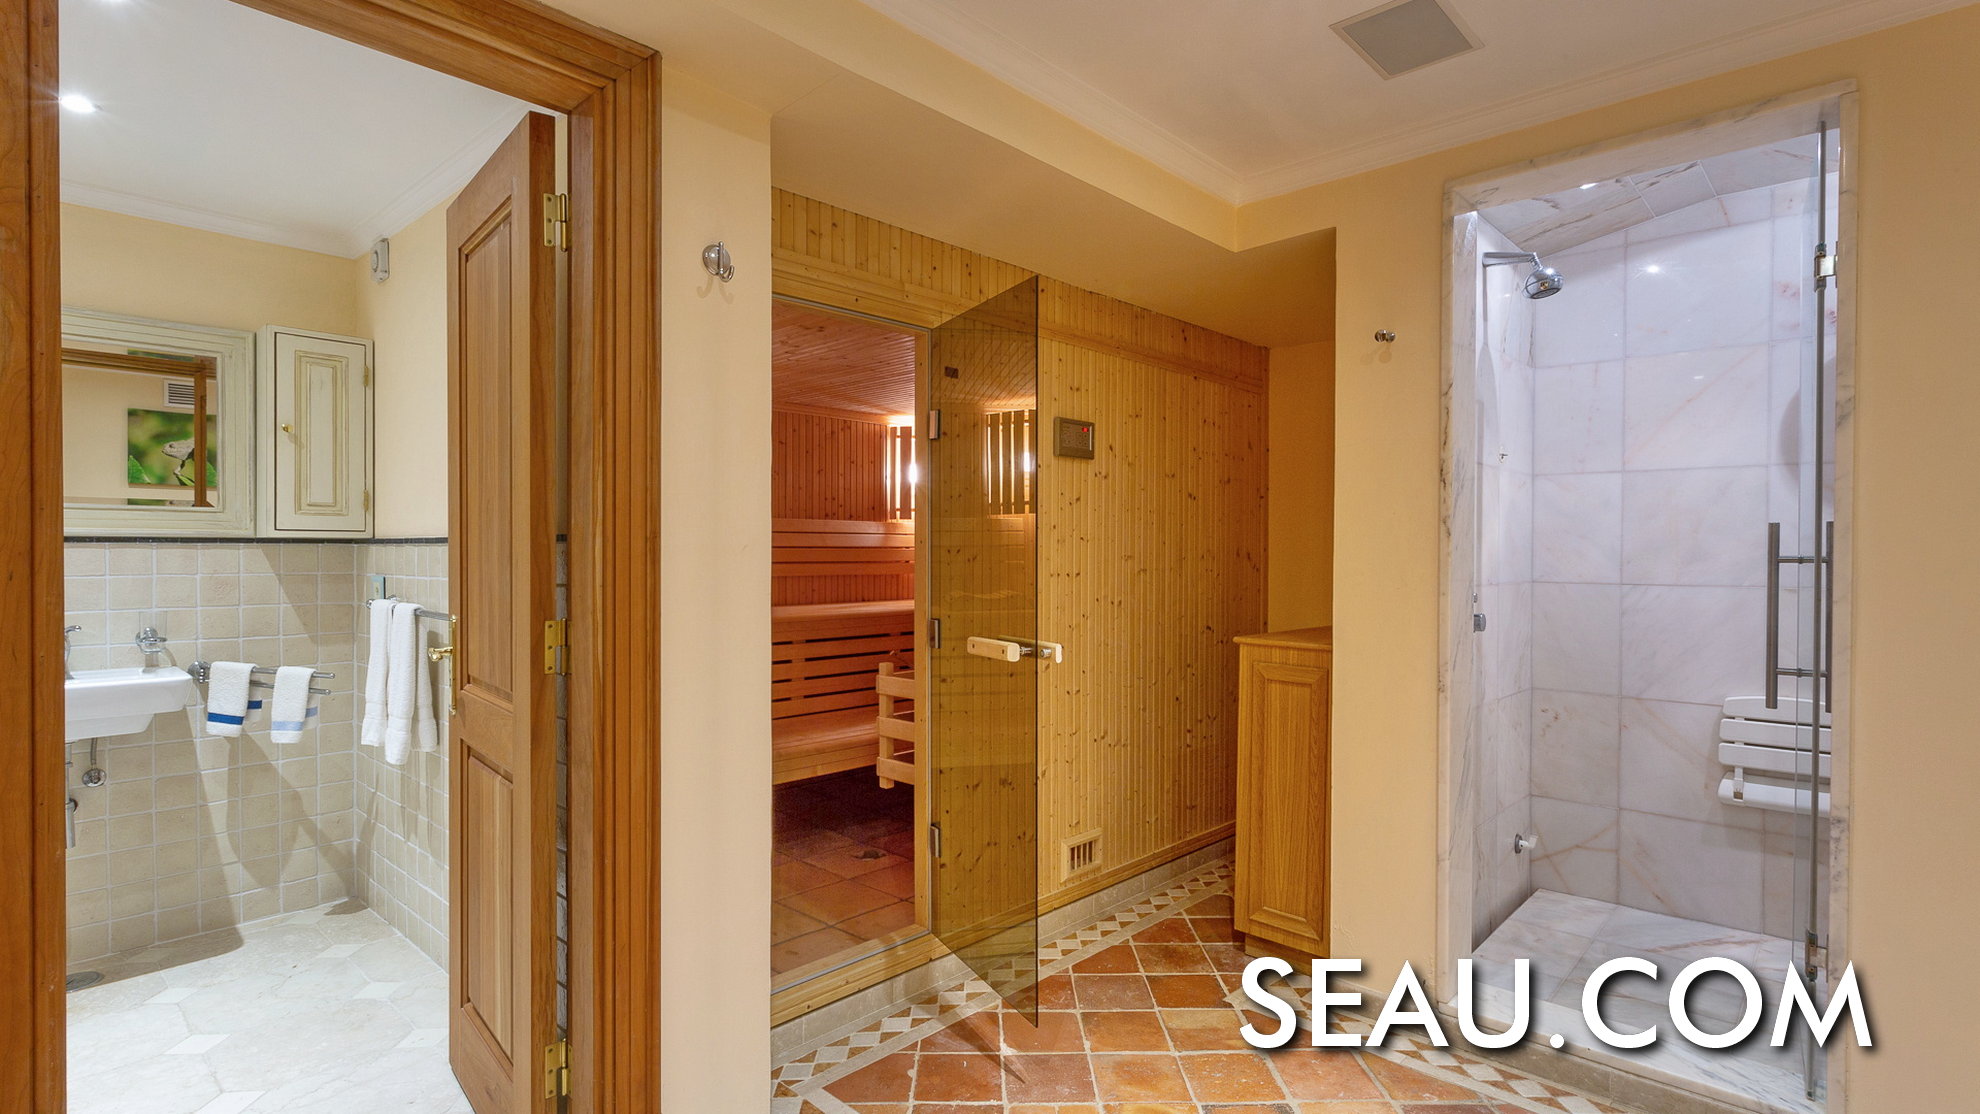 And a bathroom and a spa space, with a Turkish bath room and a sauna room.